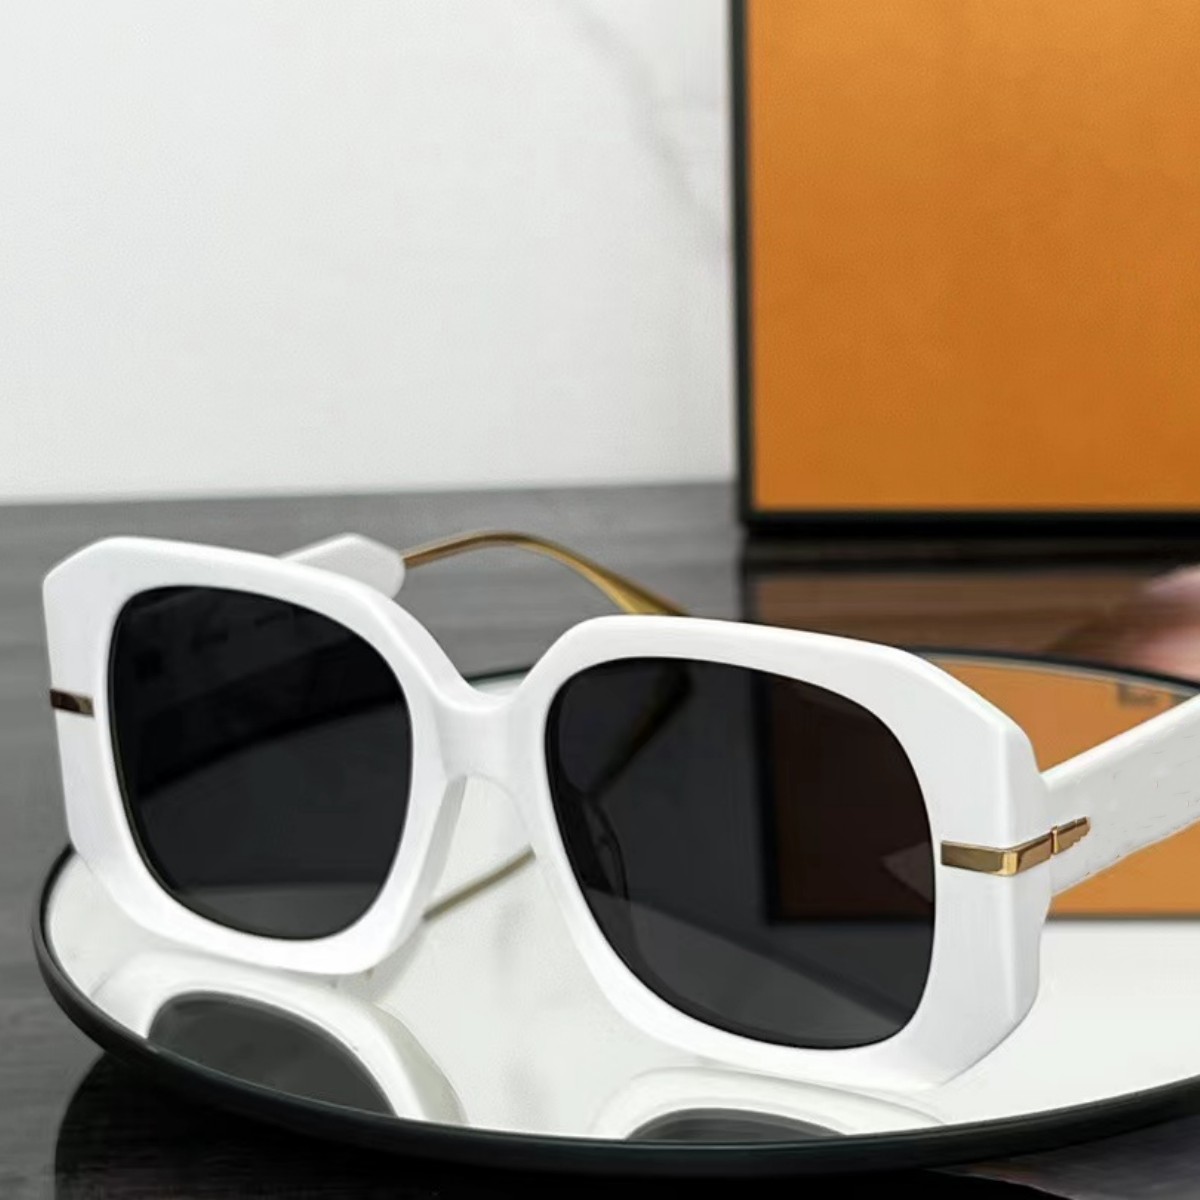 Popular New Model In 2023 Market International Brand Thick Frame Thick Mirror Leg PC Light Material Women's Luxury Fashion Sunglasses Khaki Black White Frame